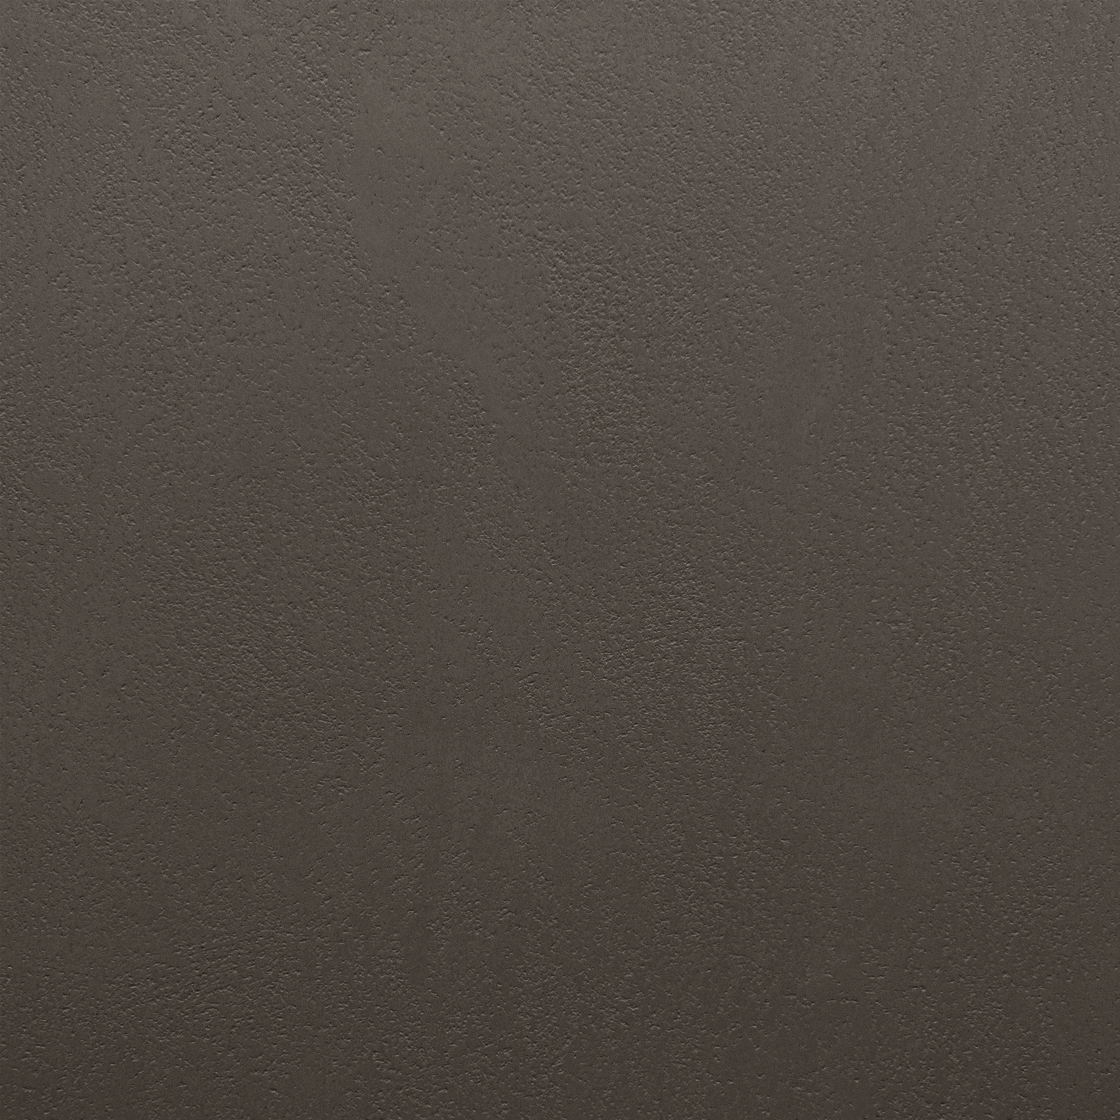 Close up of Armourcoat leatherstone exterior polished plaster finish - 39